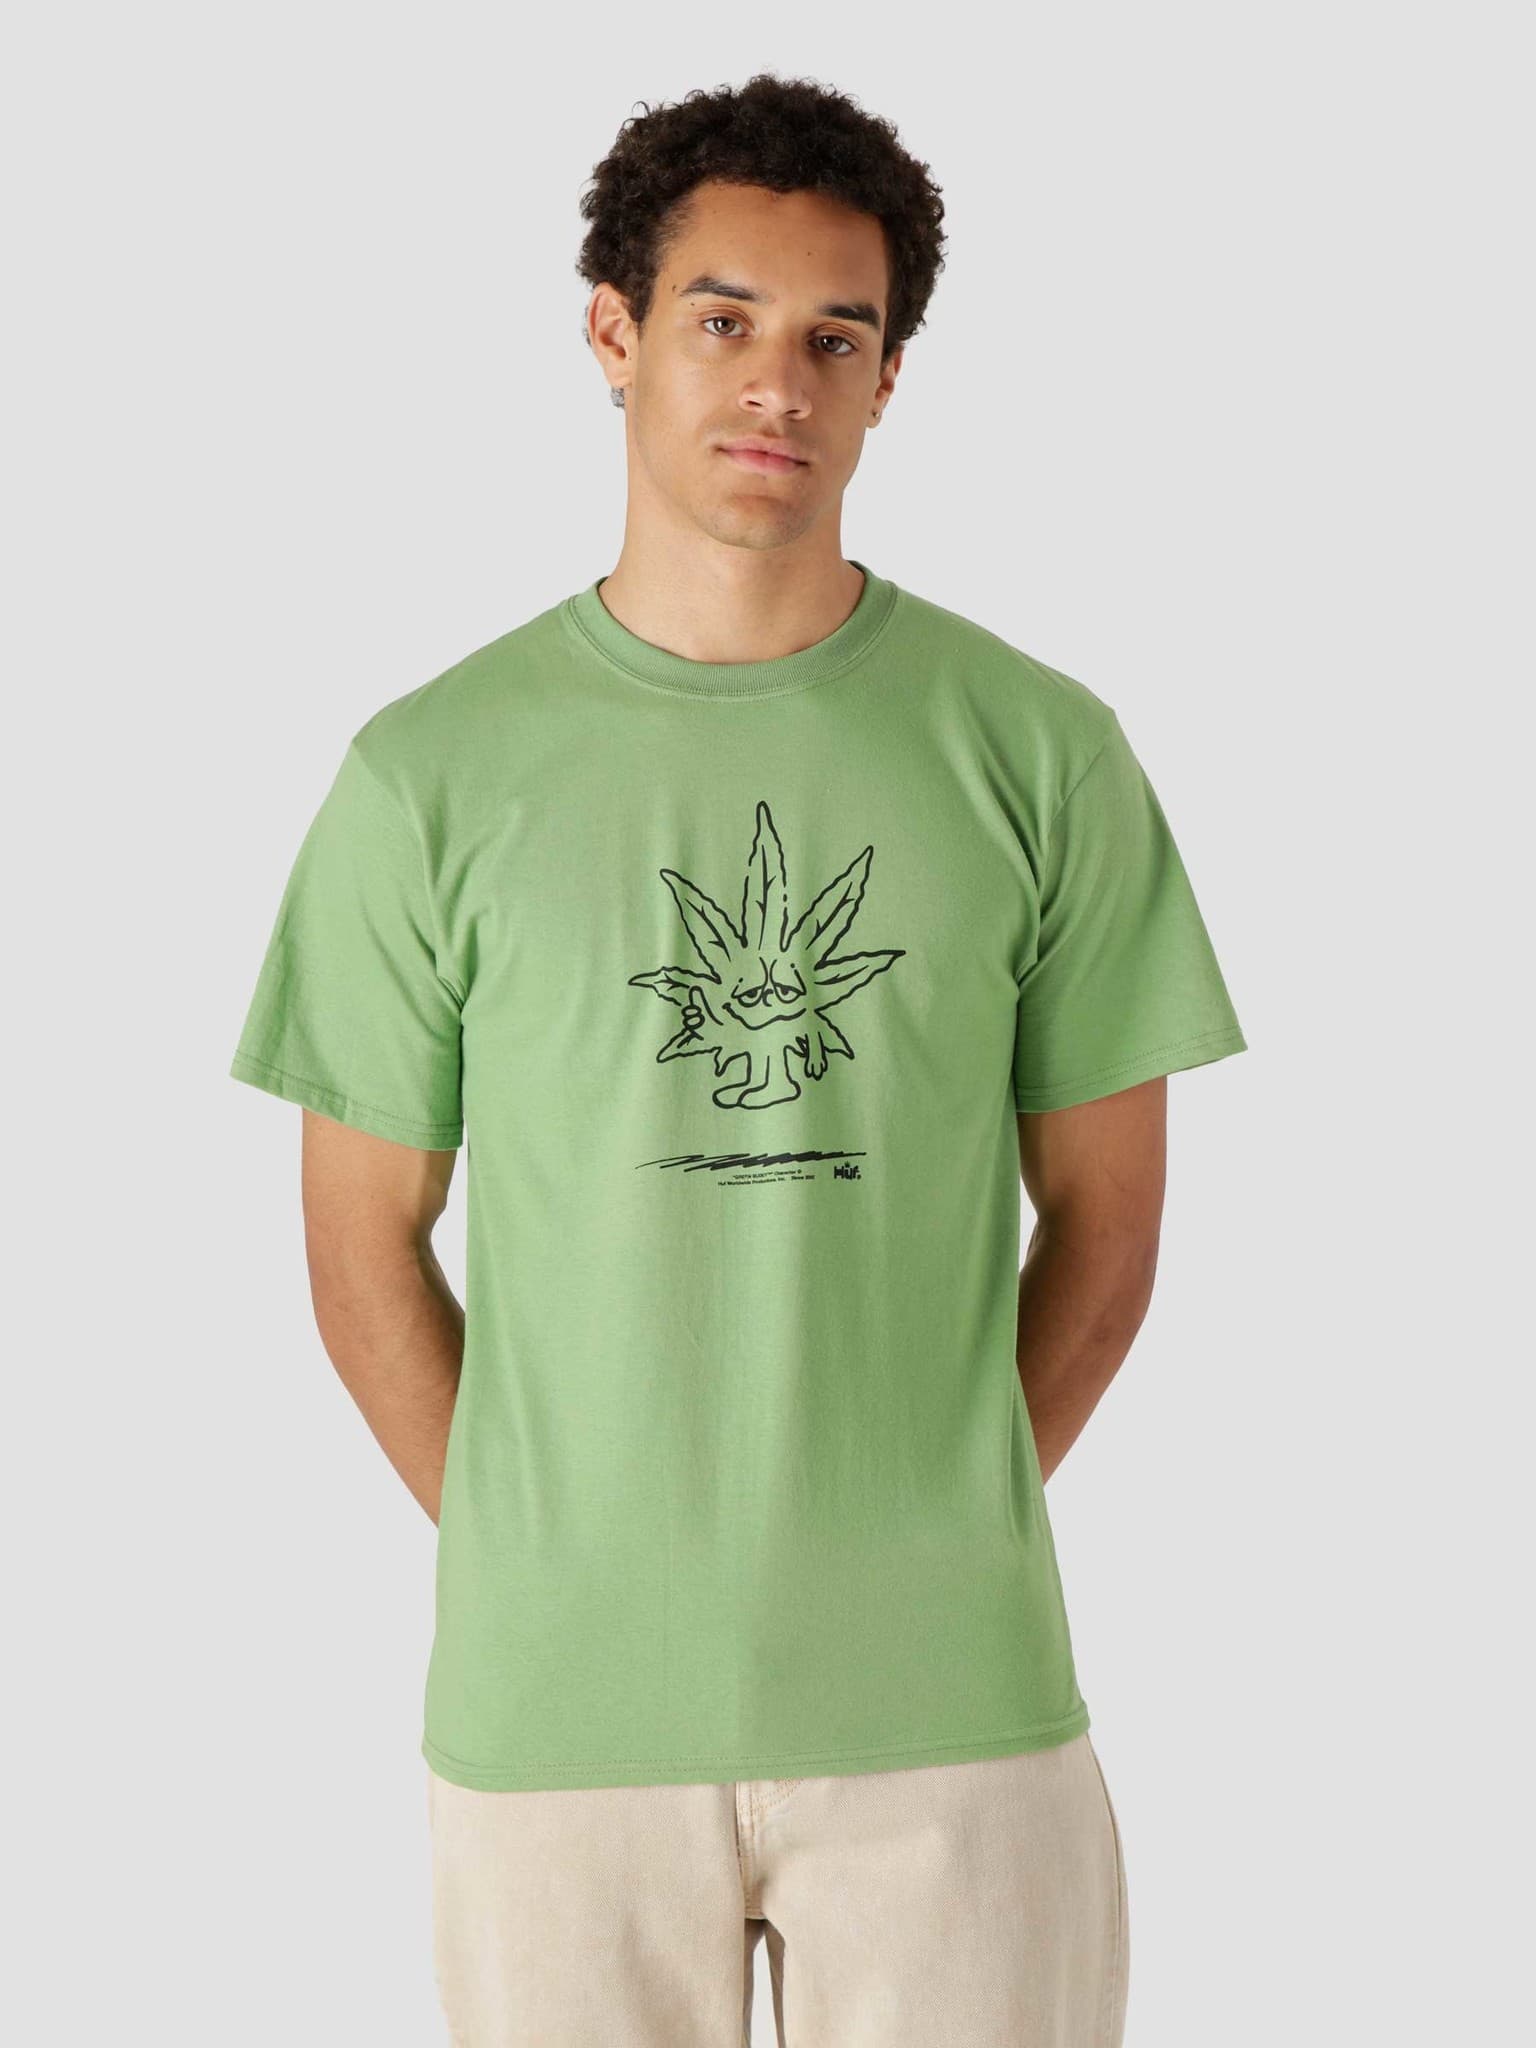 Easy Green Longsleeve T-Shirt Dill Green TS01605